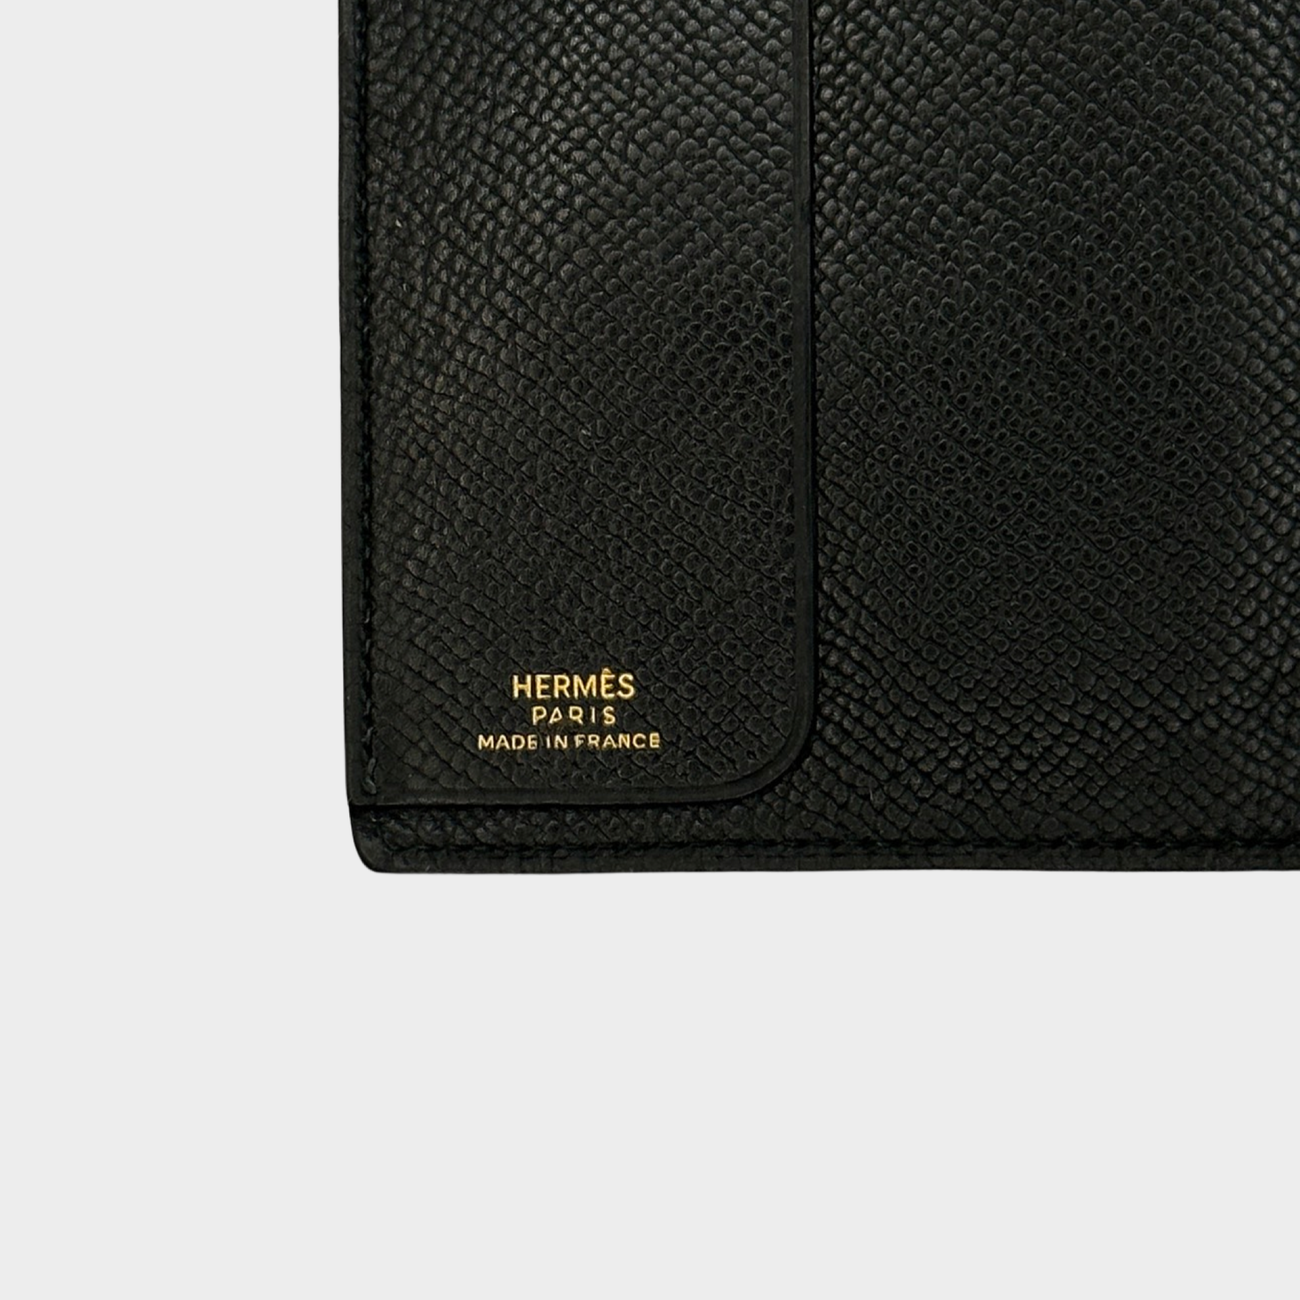 Hermes Black Box Leather Large Portfolio Document Holder w/ Back